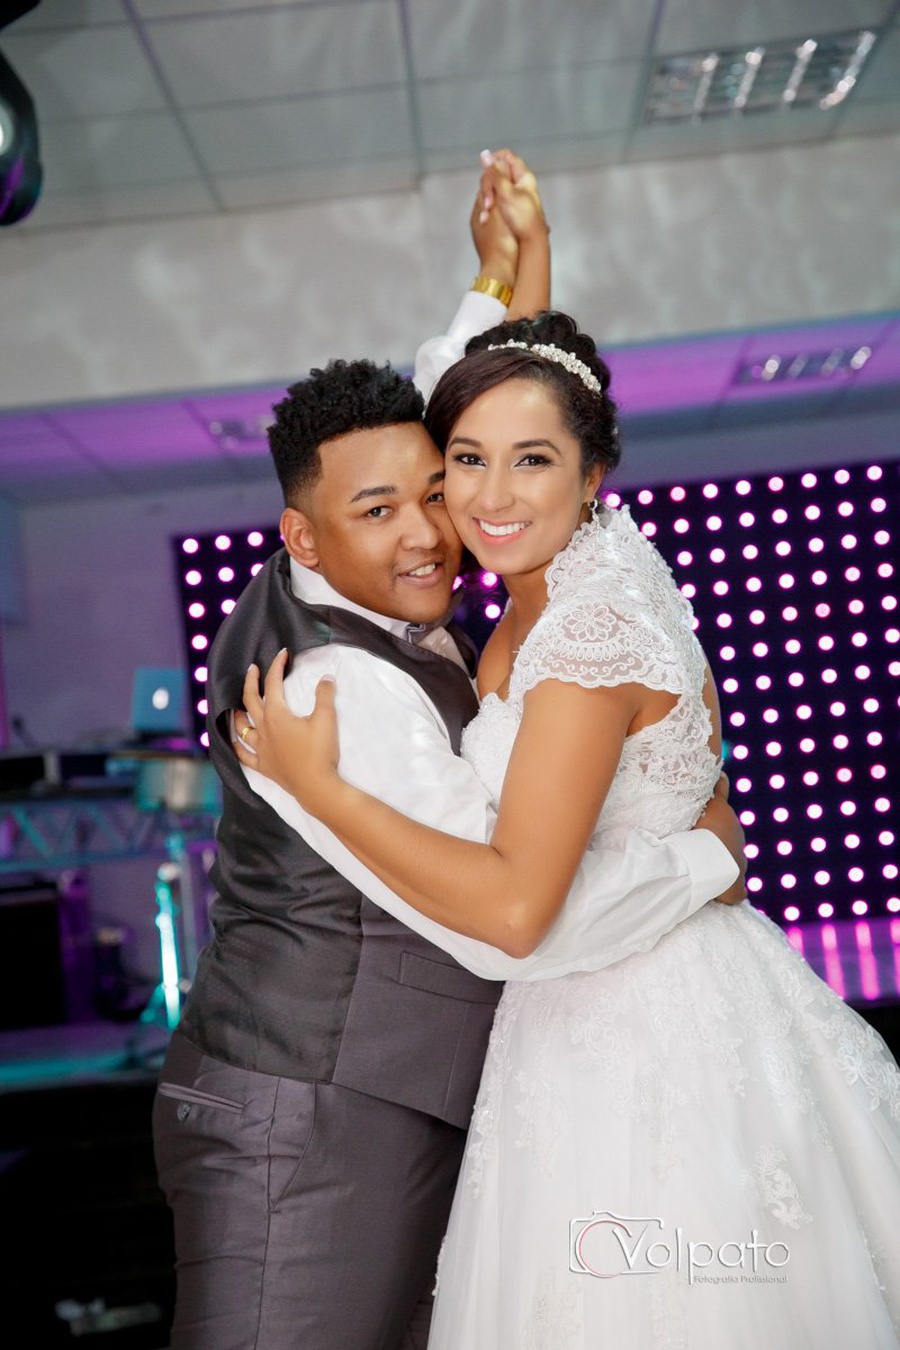 Casamento | Janine & Bruno 